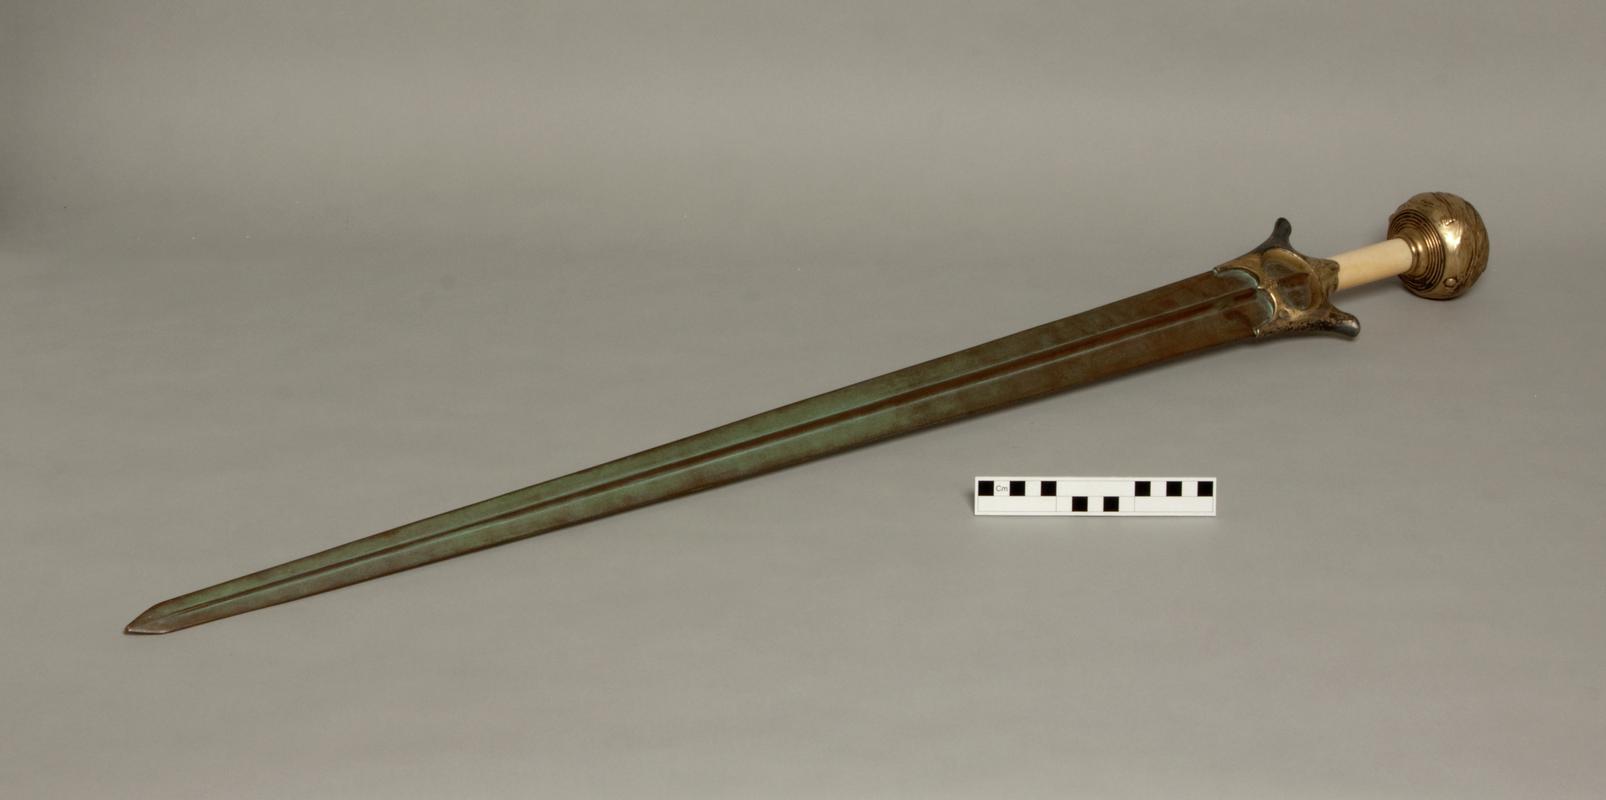 Replica bronze thrusting sword from Mycenae